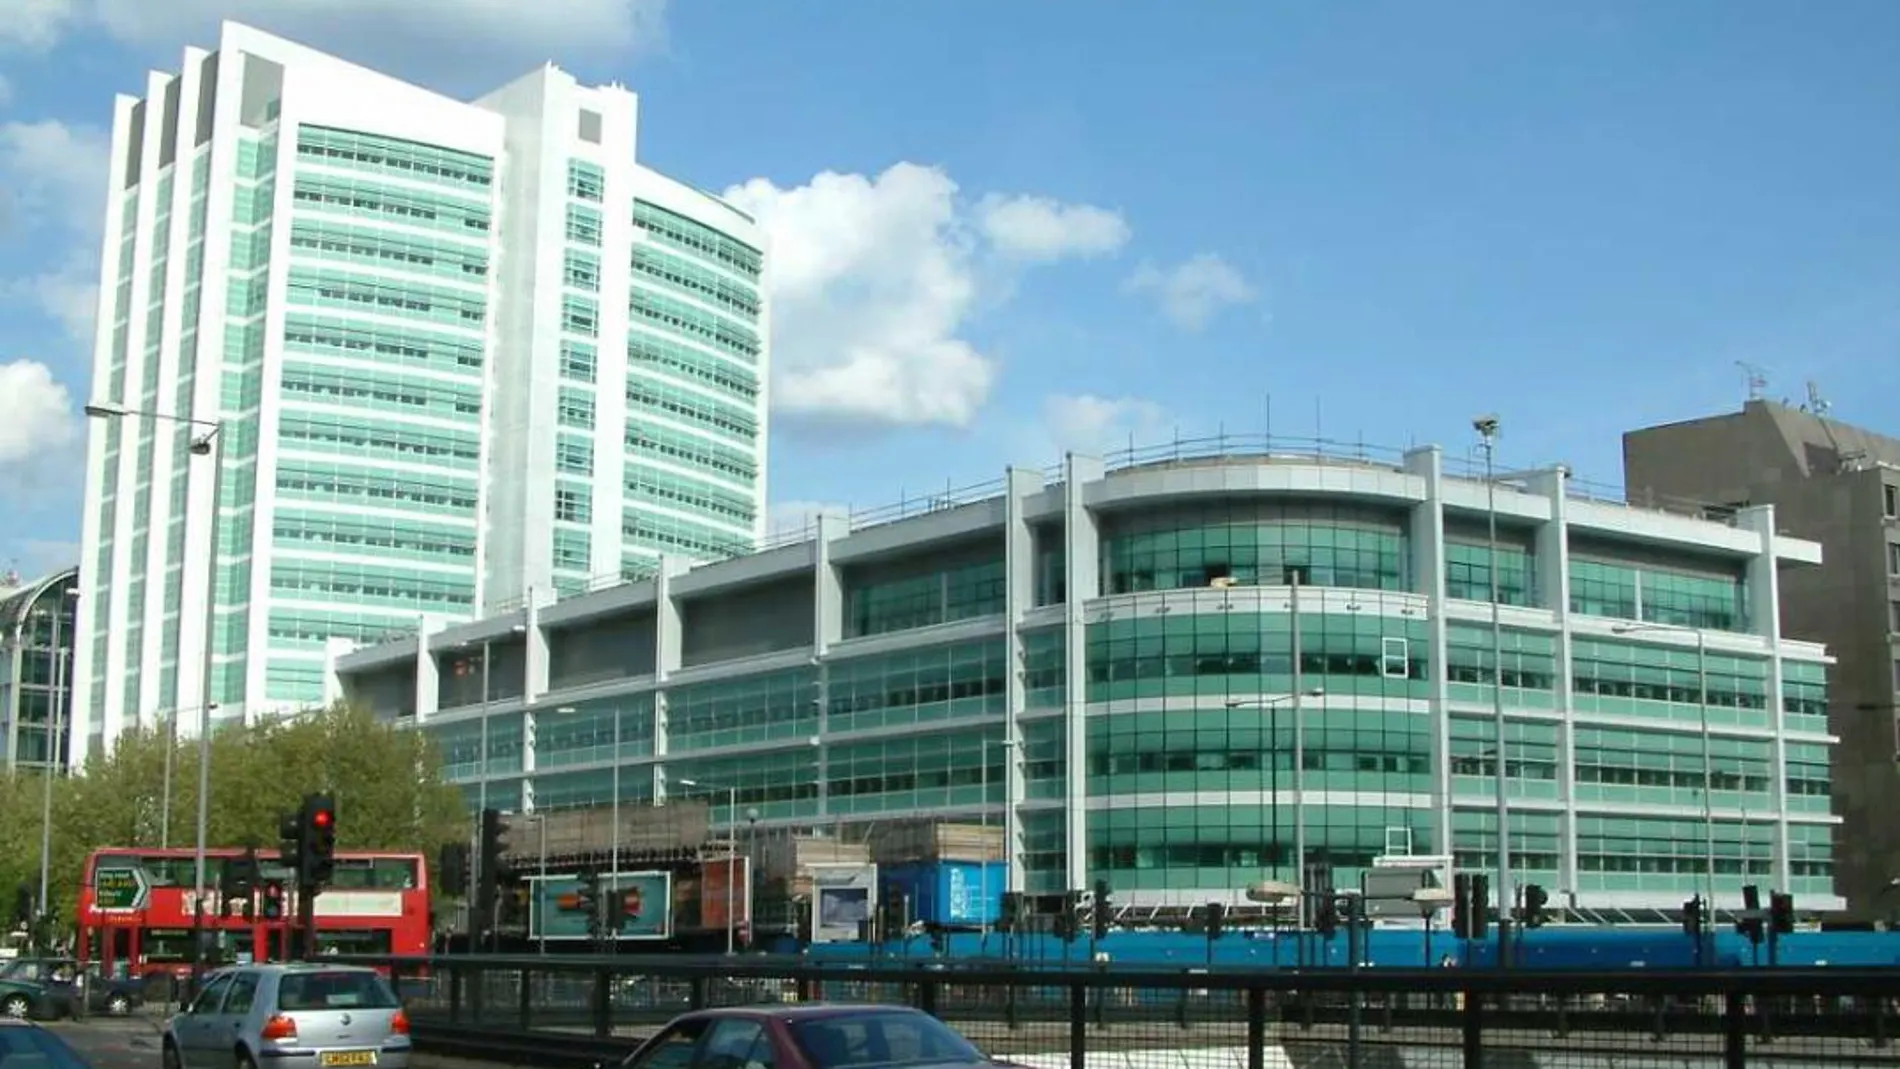 El University College Hospital de Londres / Wikipedia